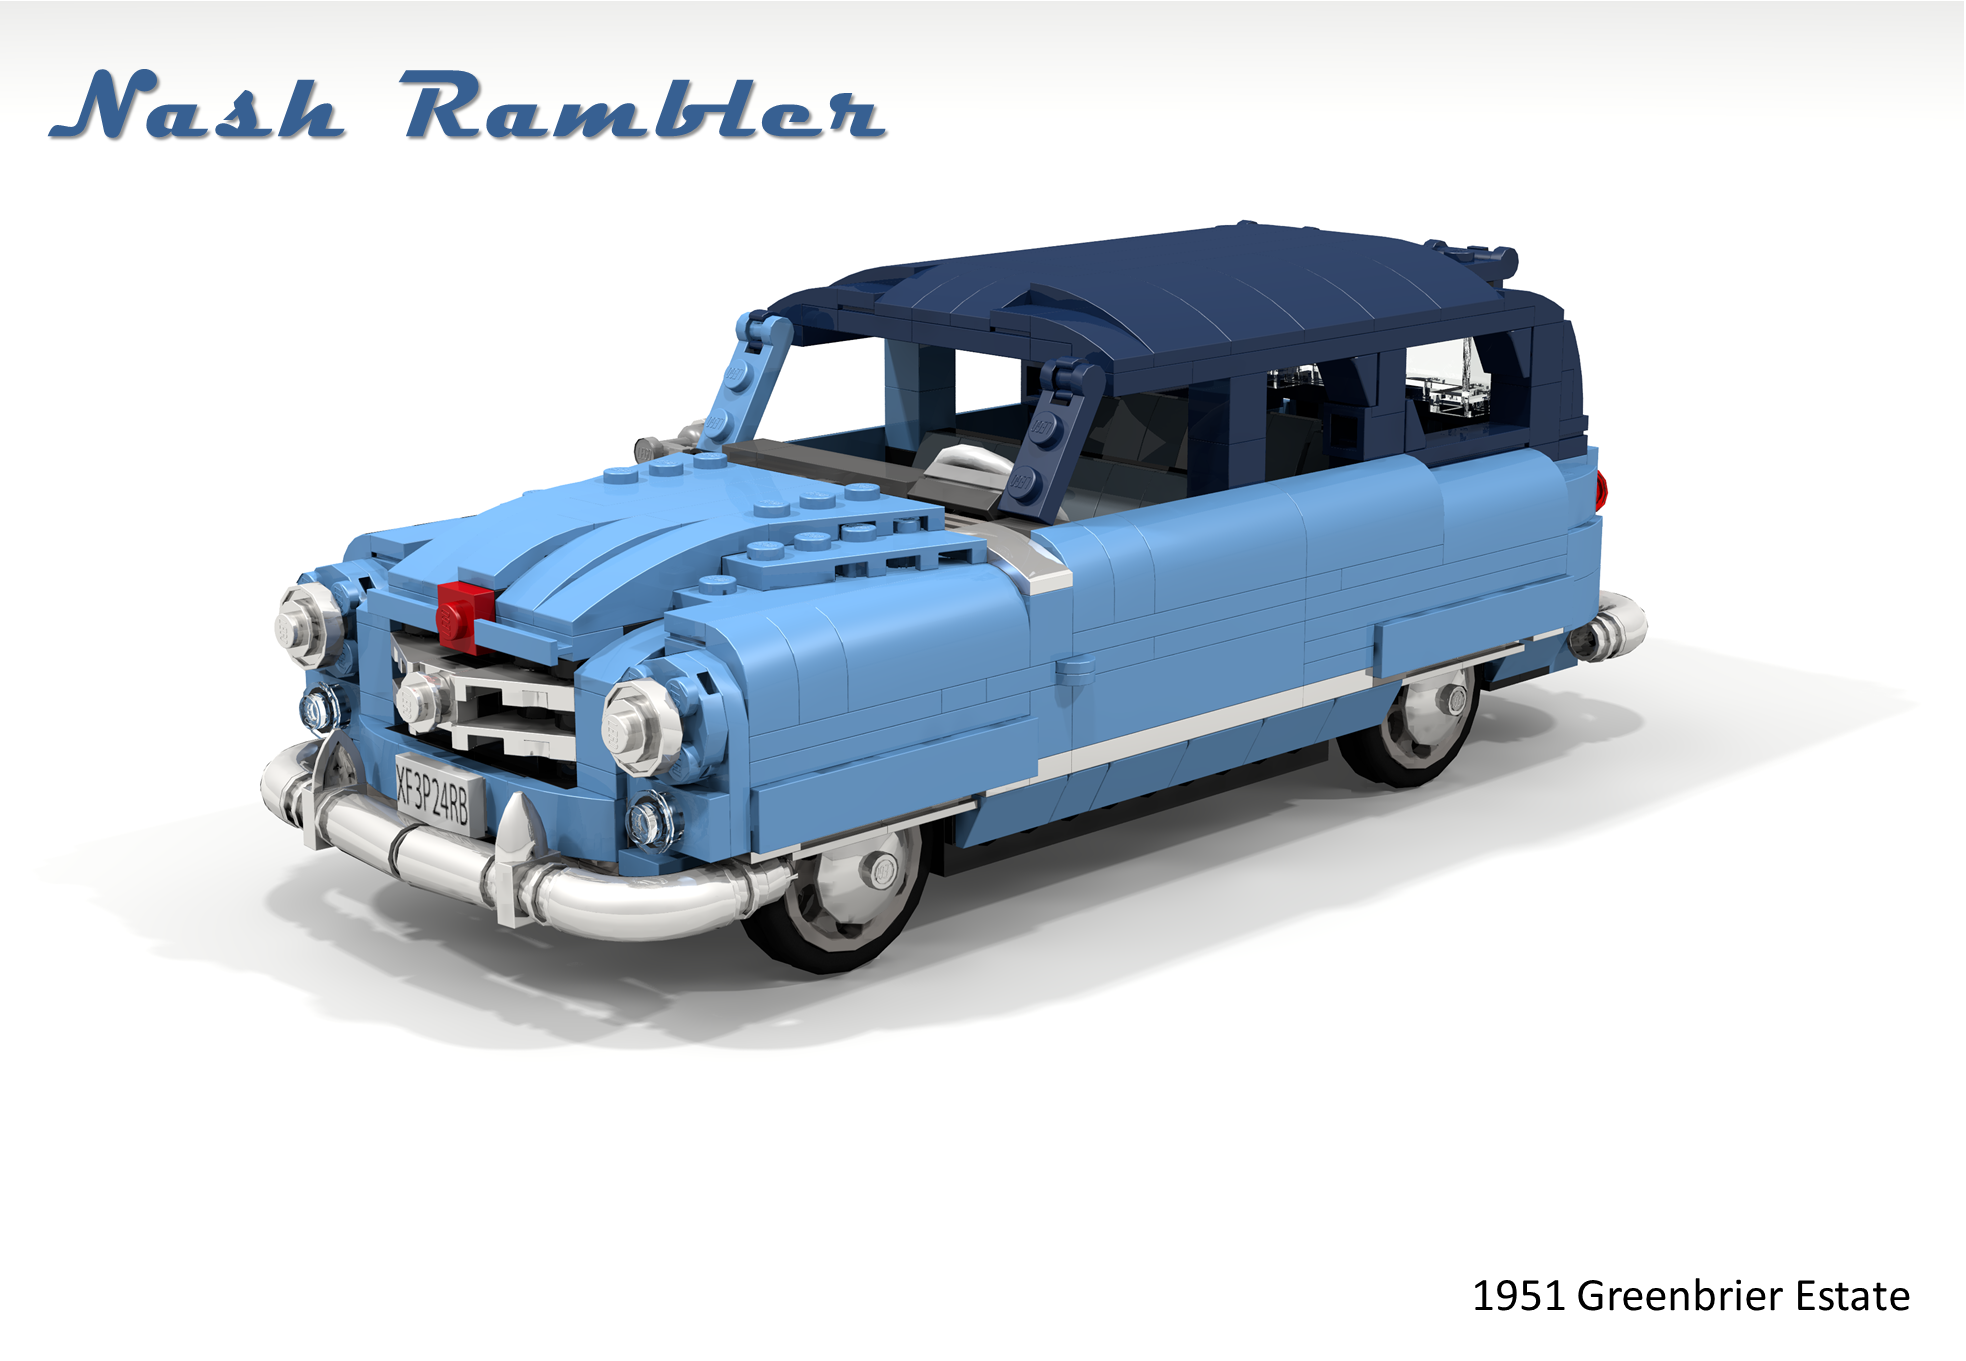 1951_nash_ramber_greenbrier_wagon.png